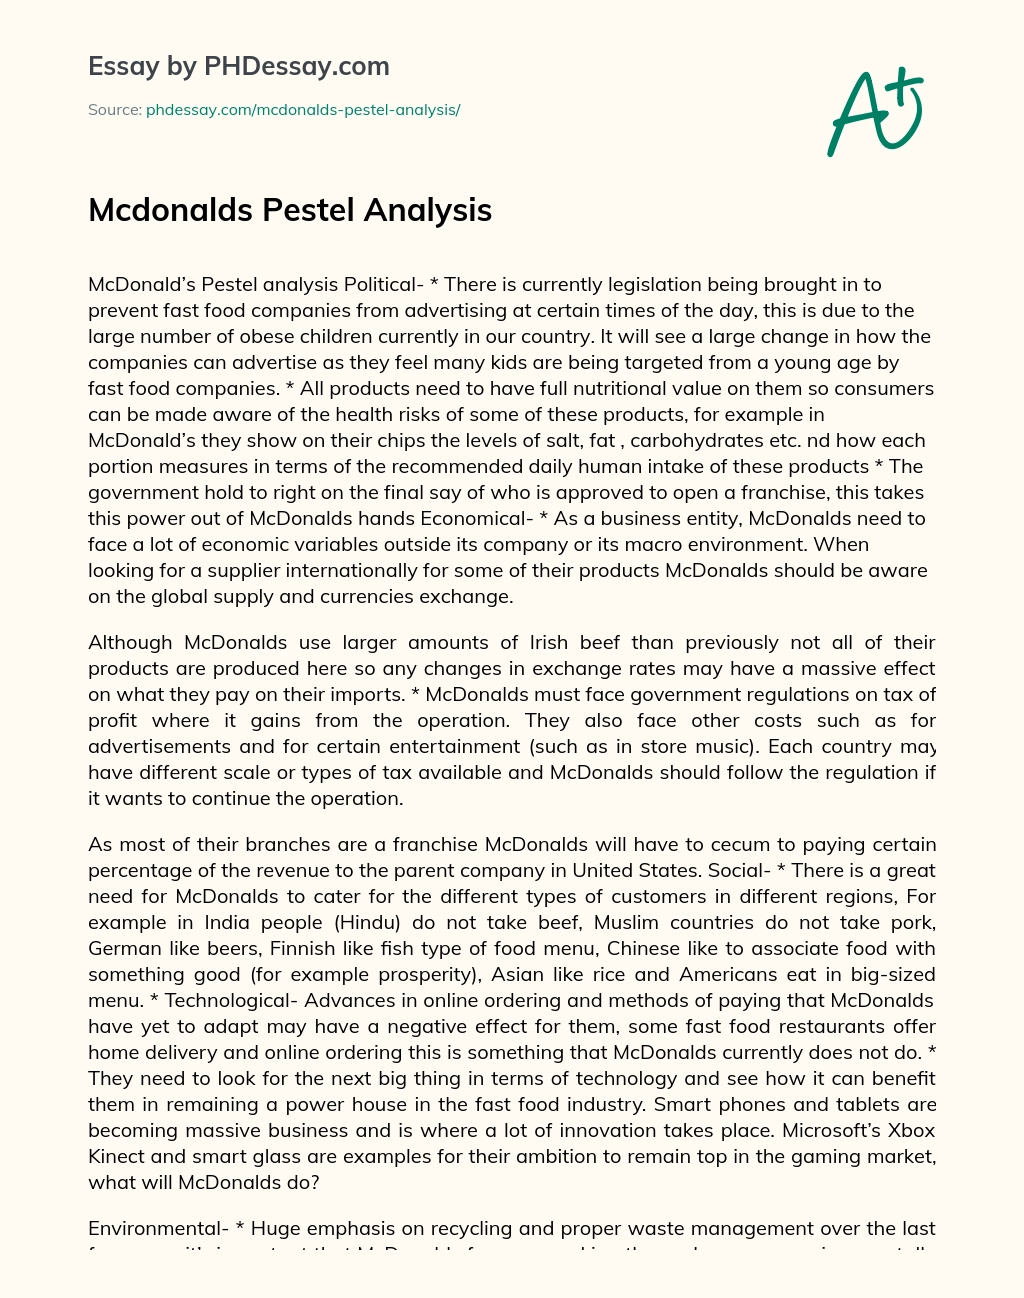 Mcdonalds Pestel Analysis essay